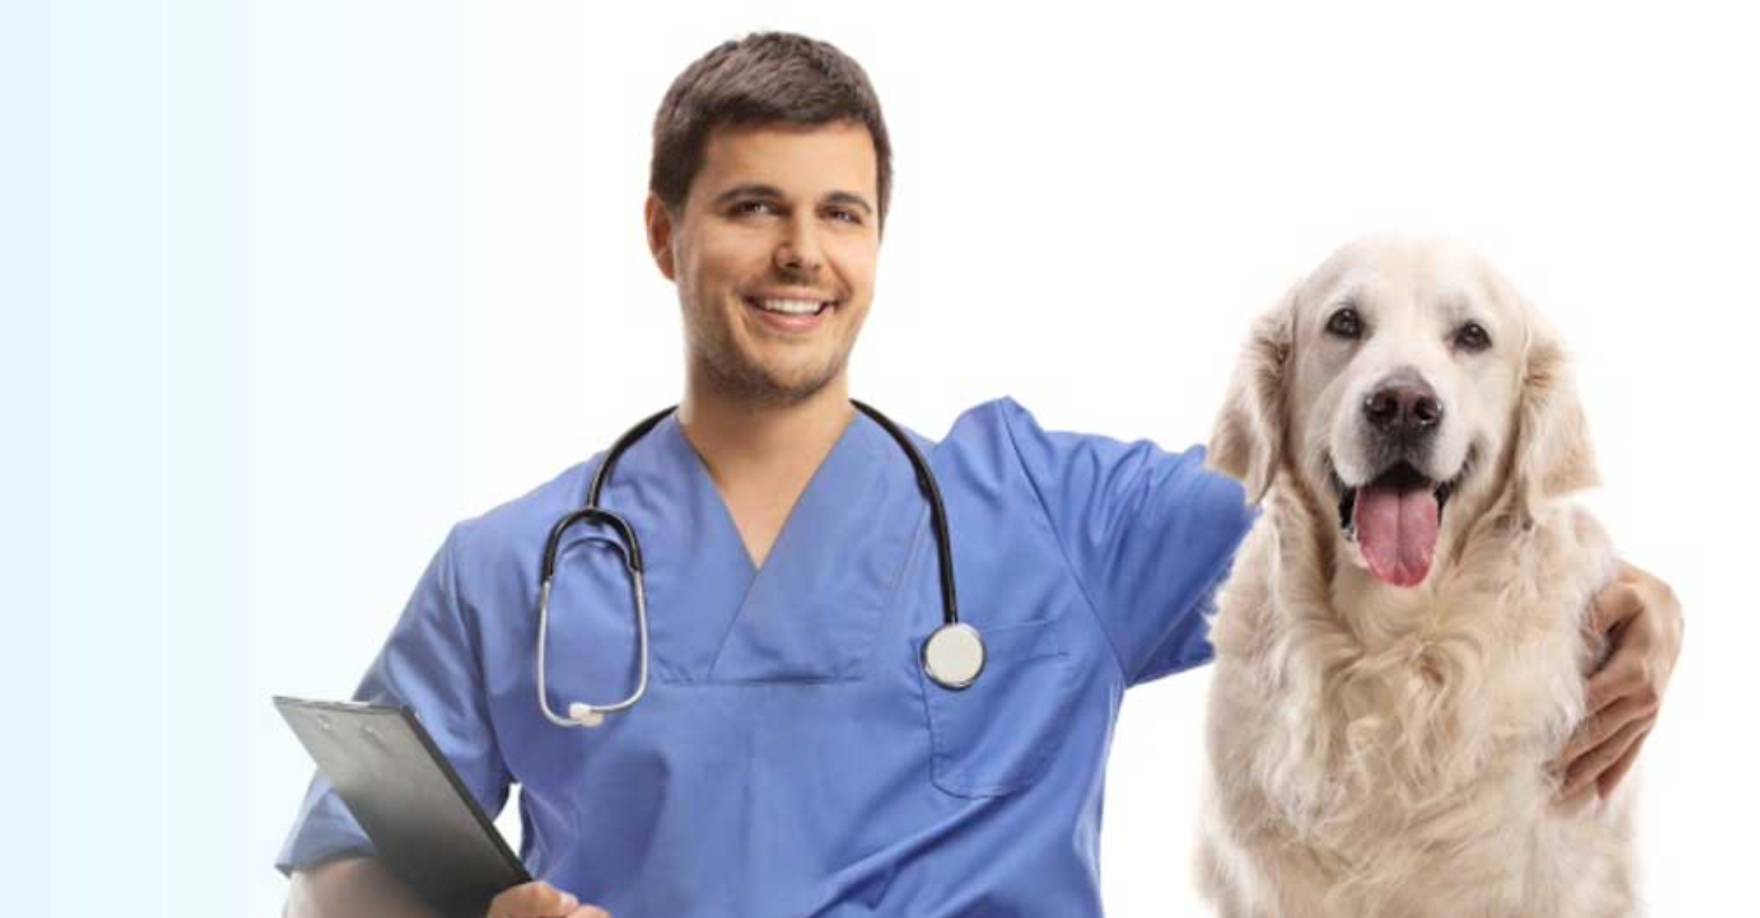 veterinarian and dog